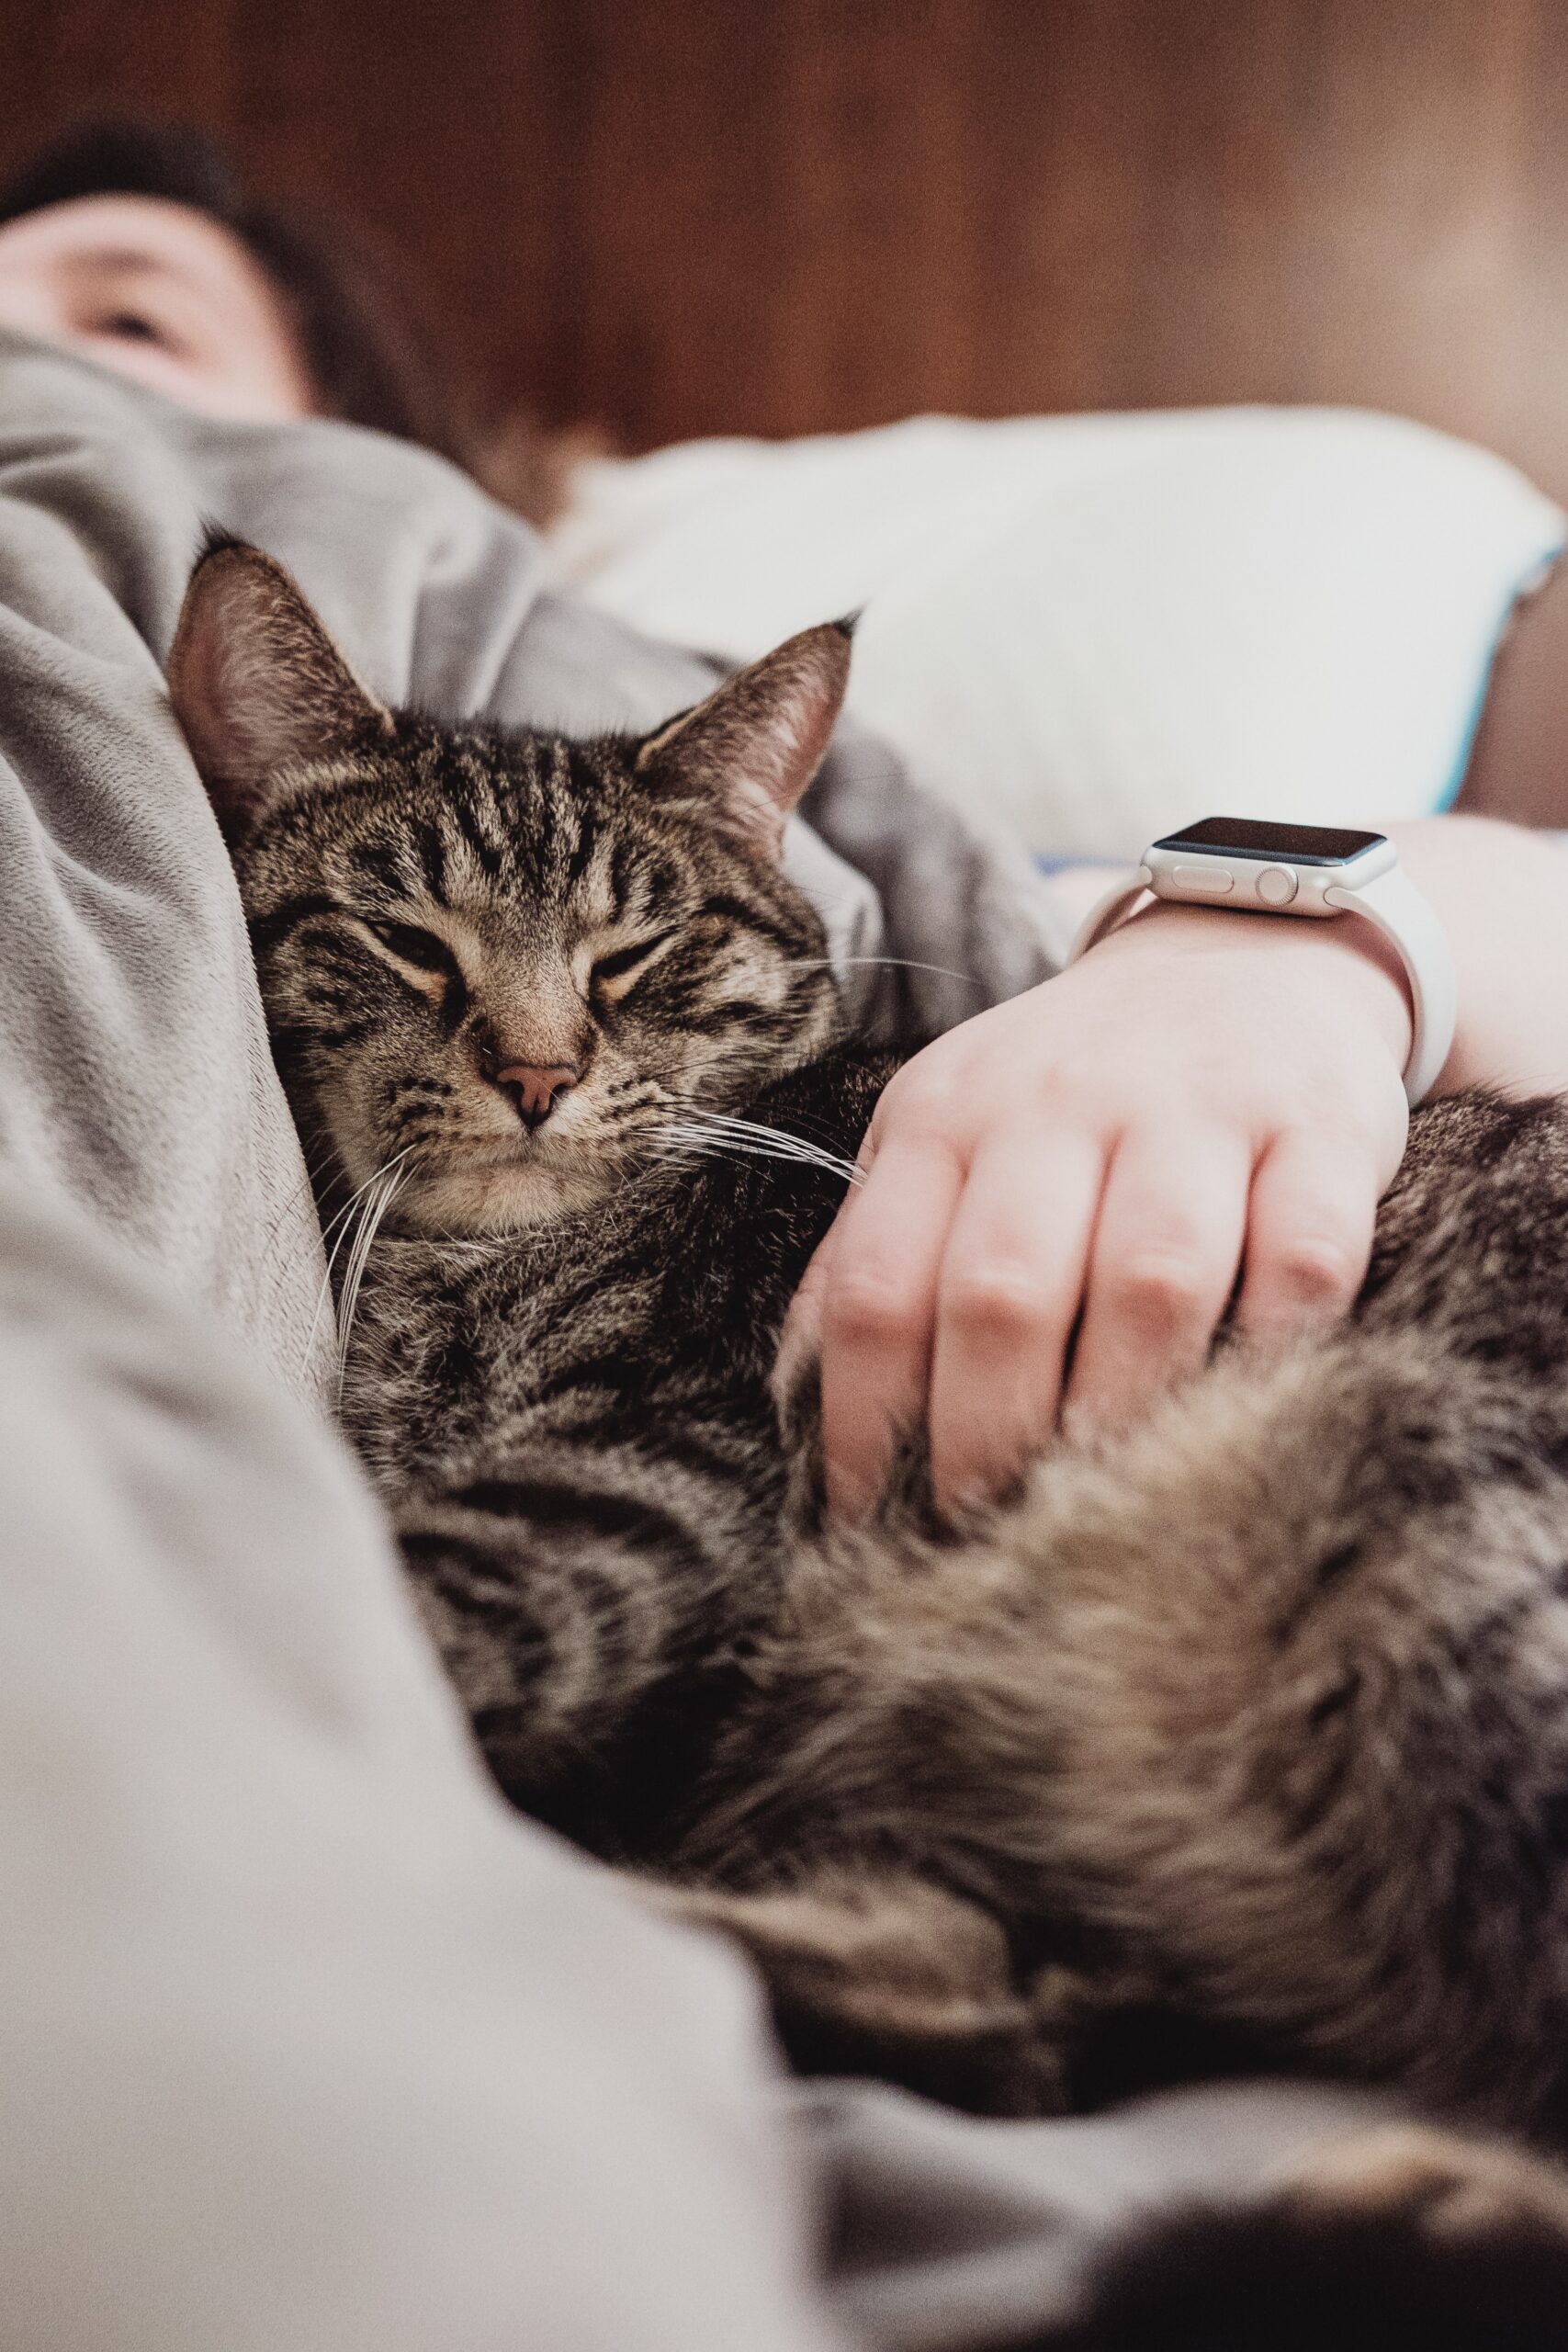 How Do Pet Friendly Hotels Address Noise Concerns?